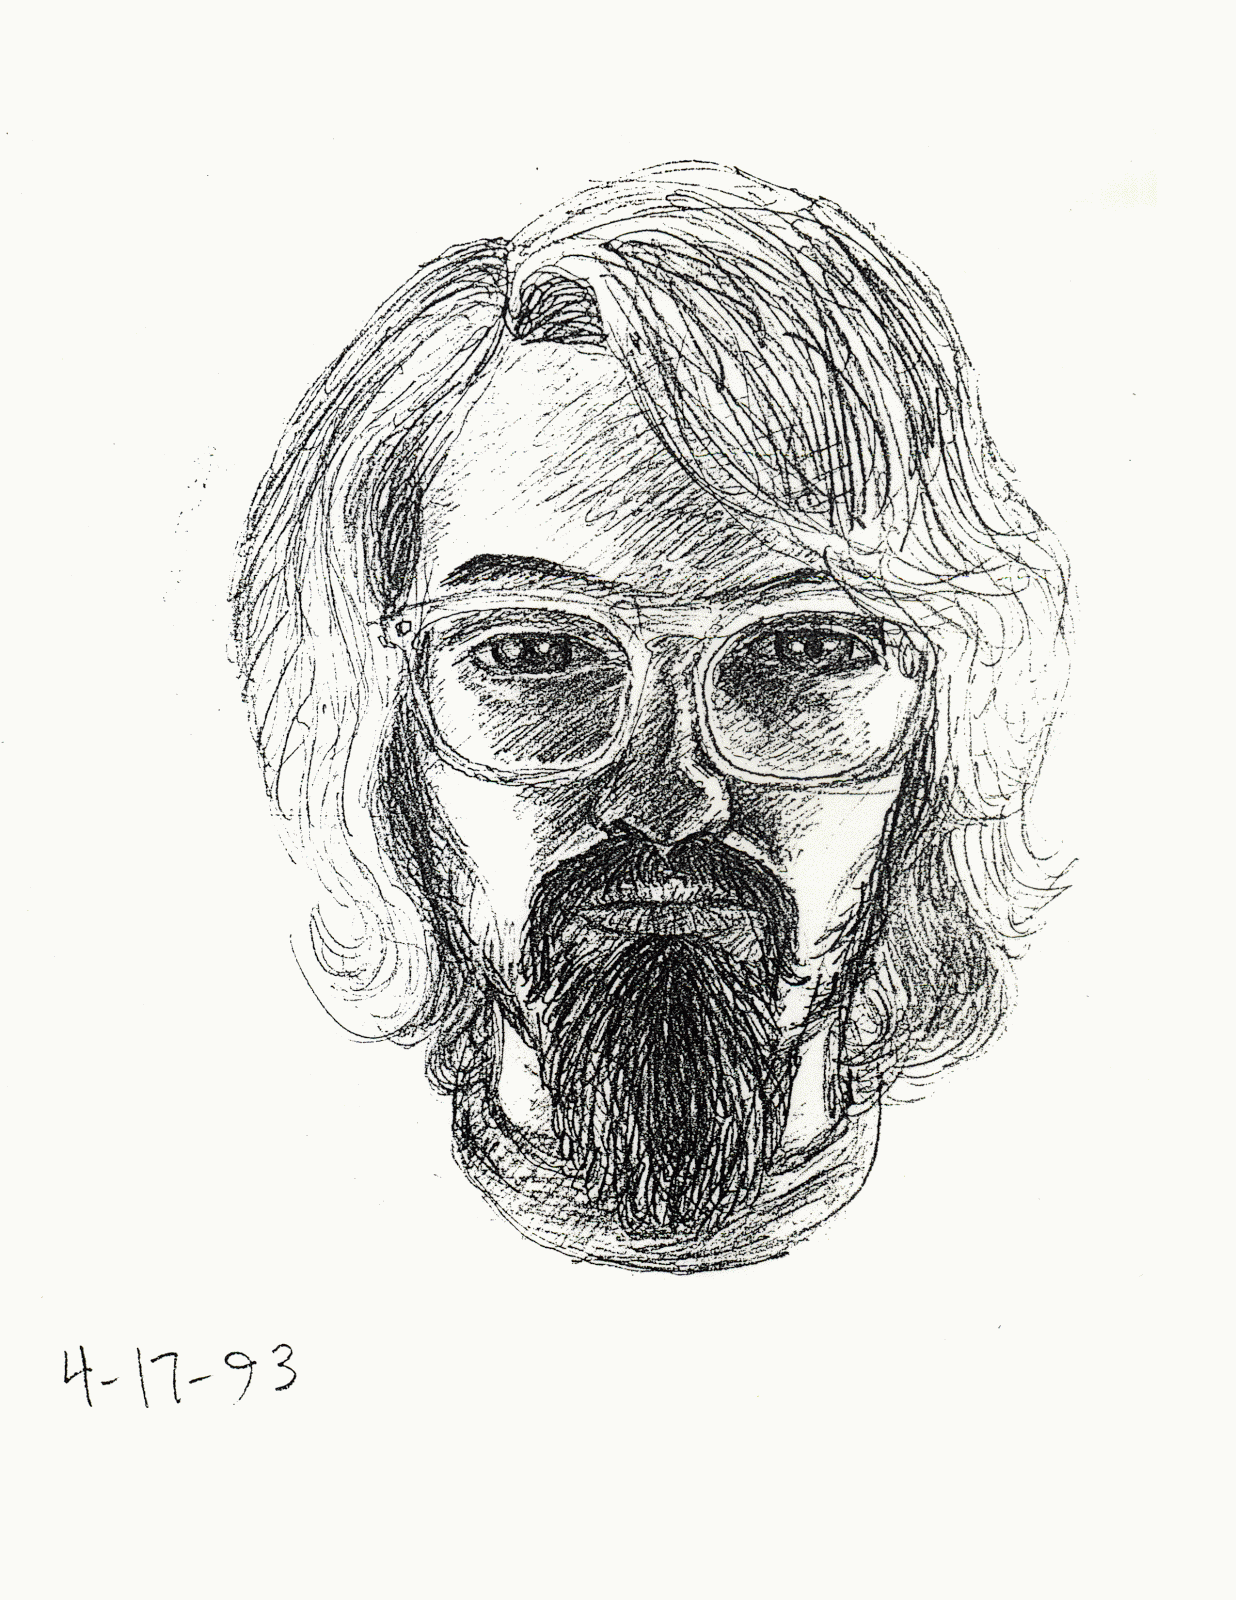 Self-portrait   4-17-93